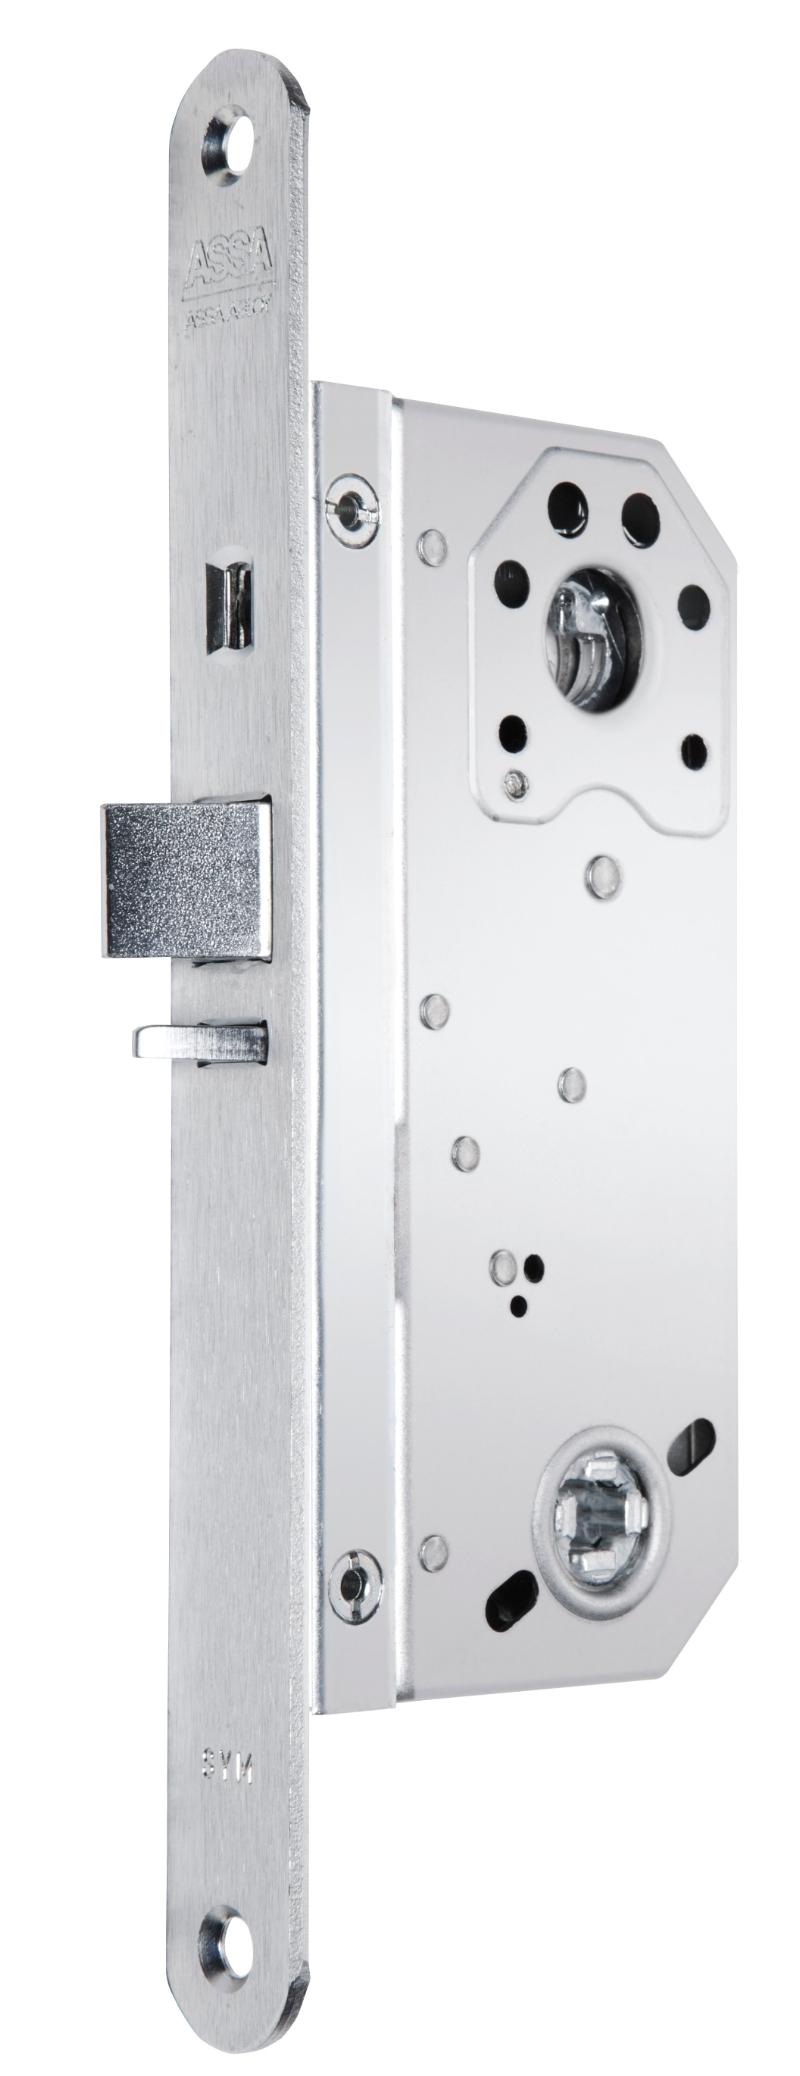 Assa lock case 8562, without tin